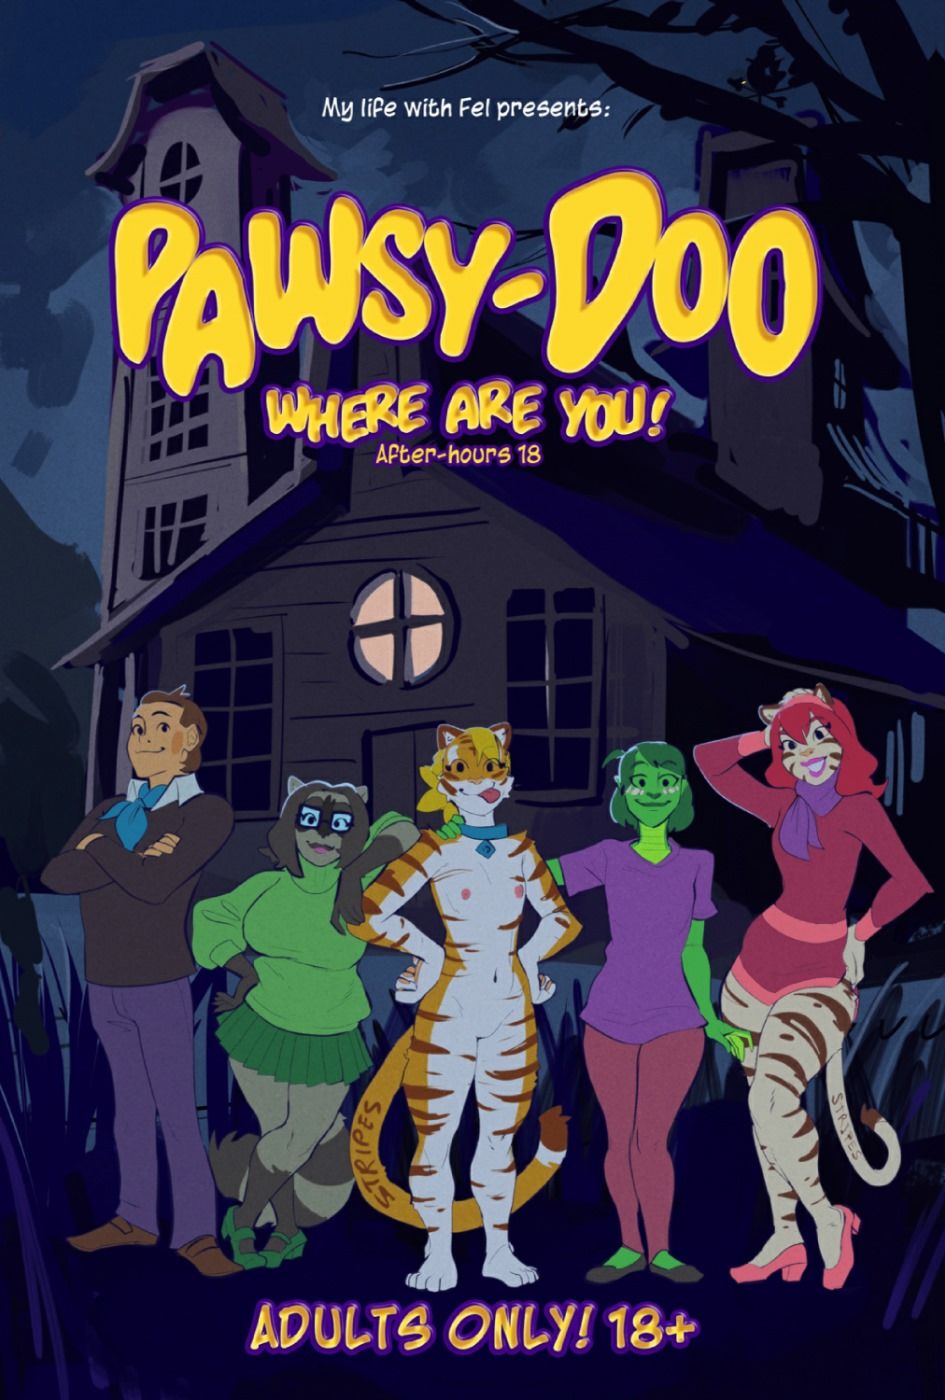 [KennoArkkan] Pawsy-Doo Where are you!,Scooby Doo page 1